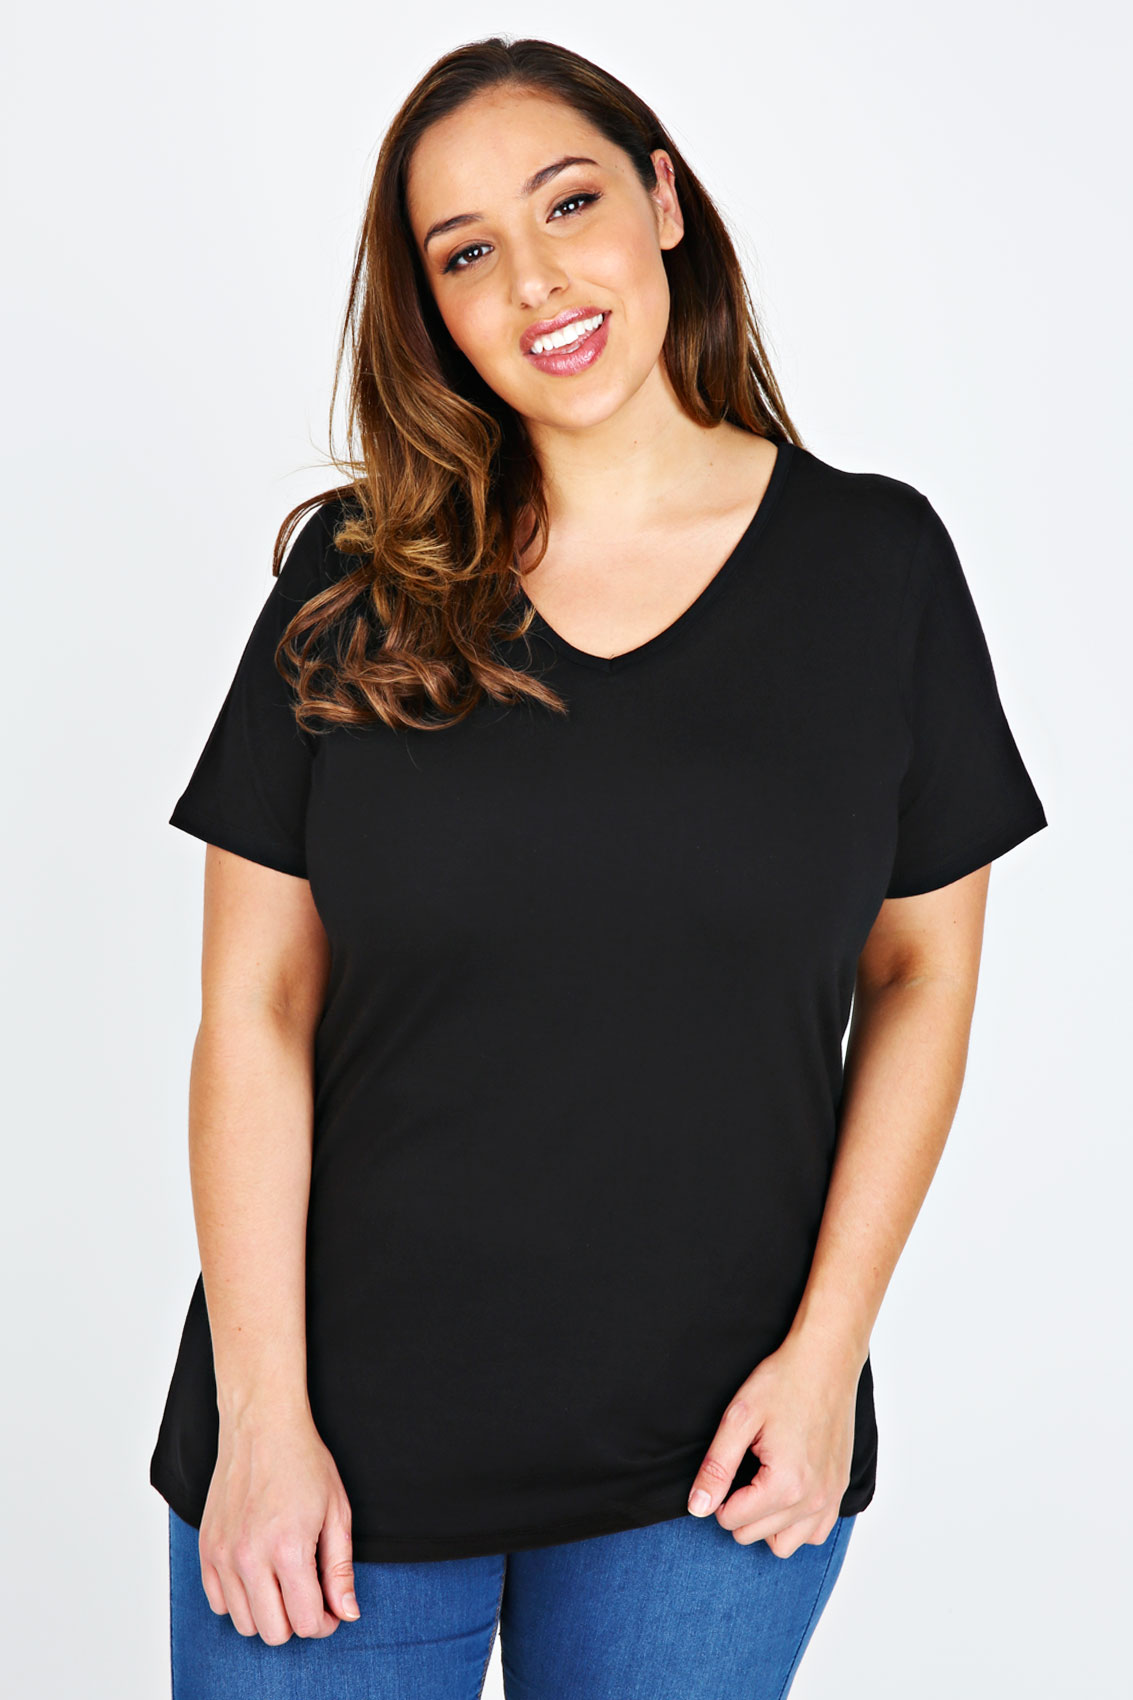 Black Plain Basic Short Sleeved V-Neck T-shirt plus Size 16 to 32